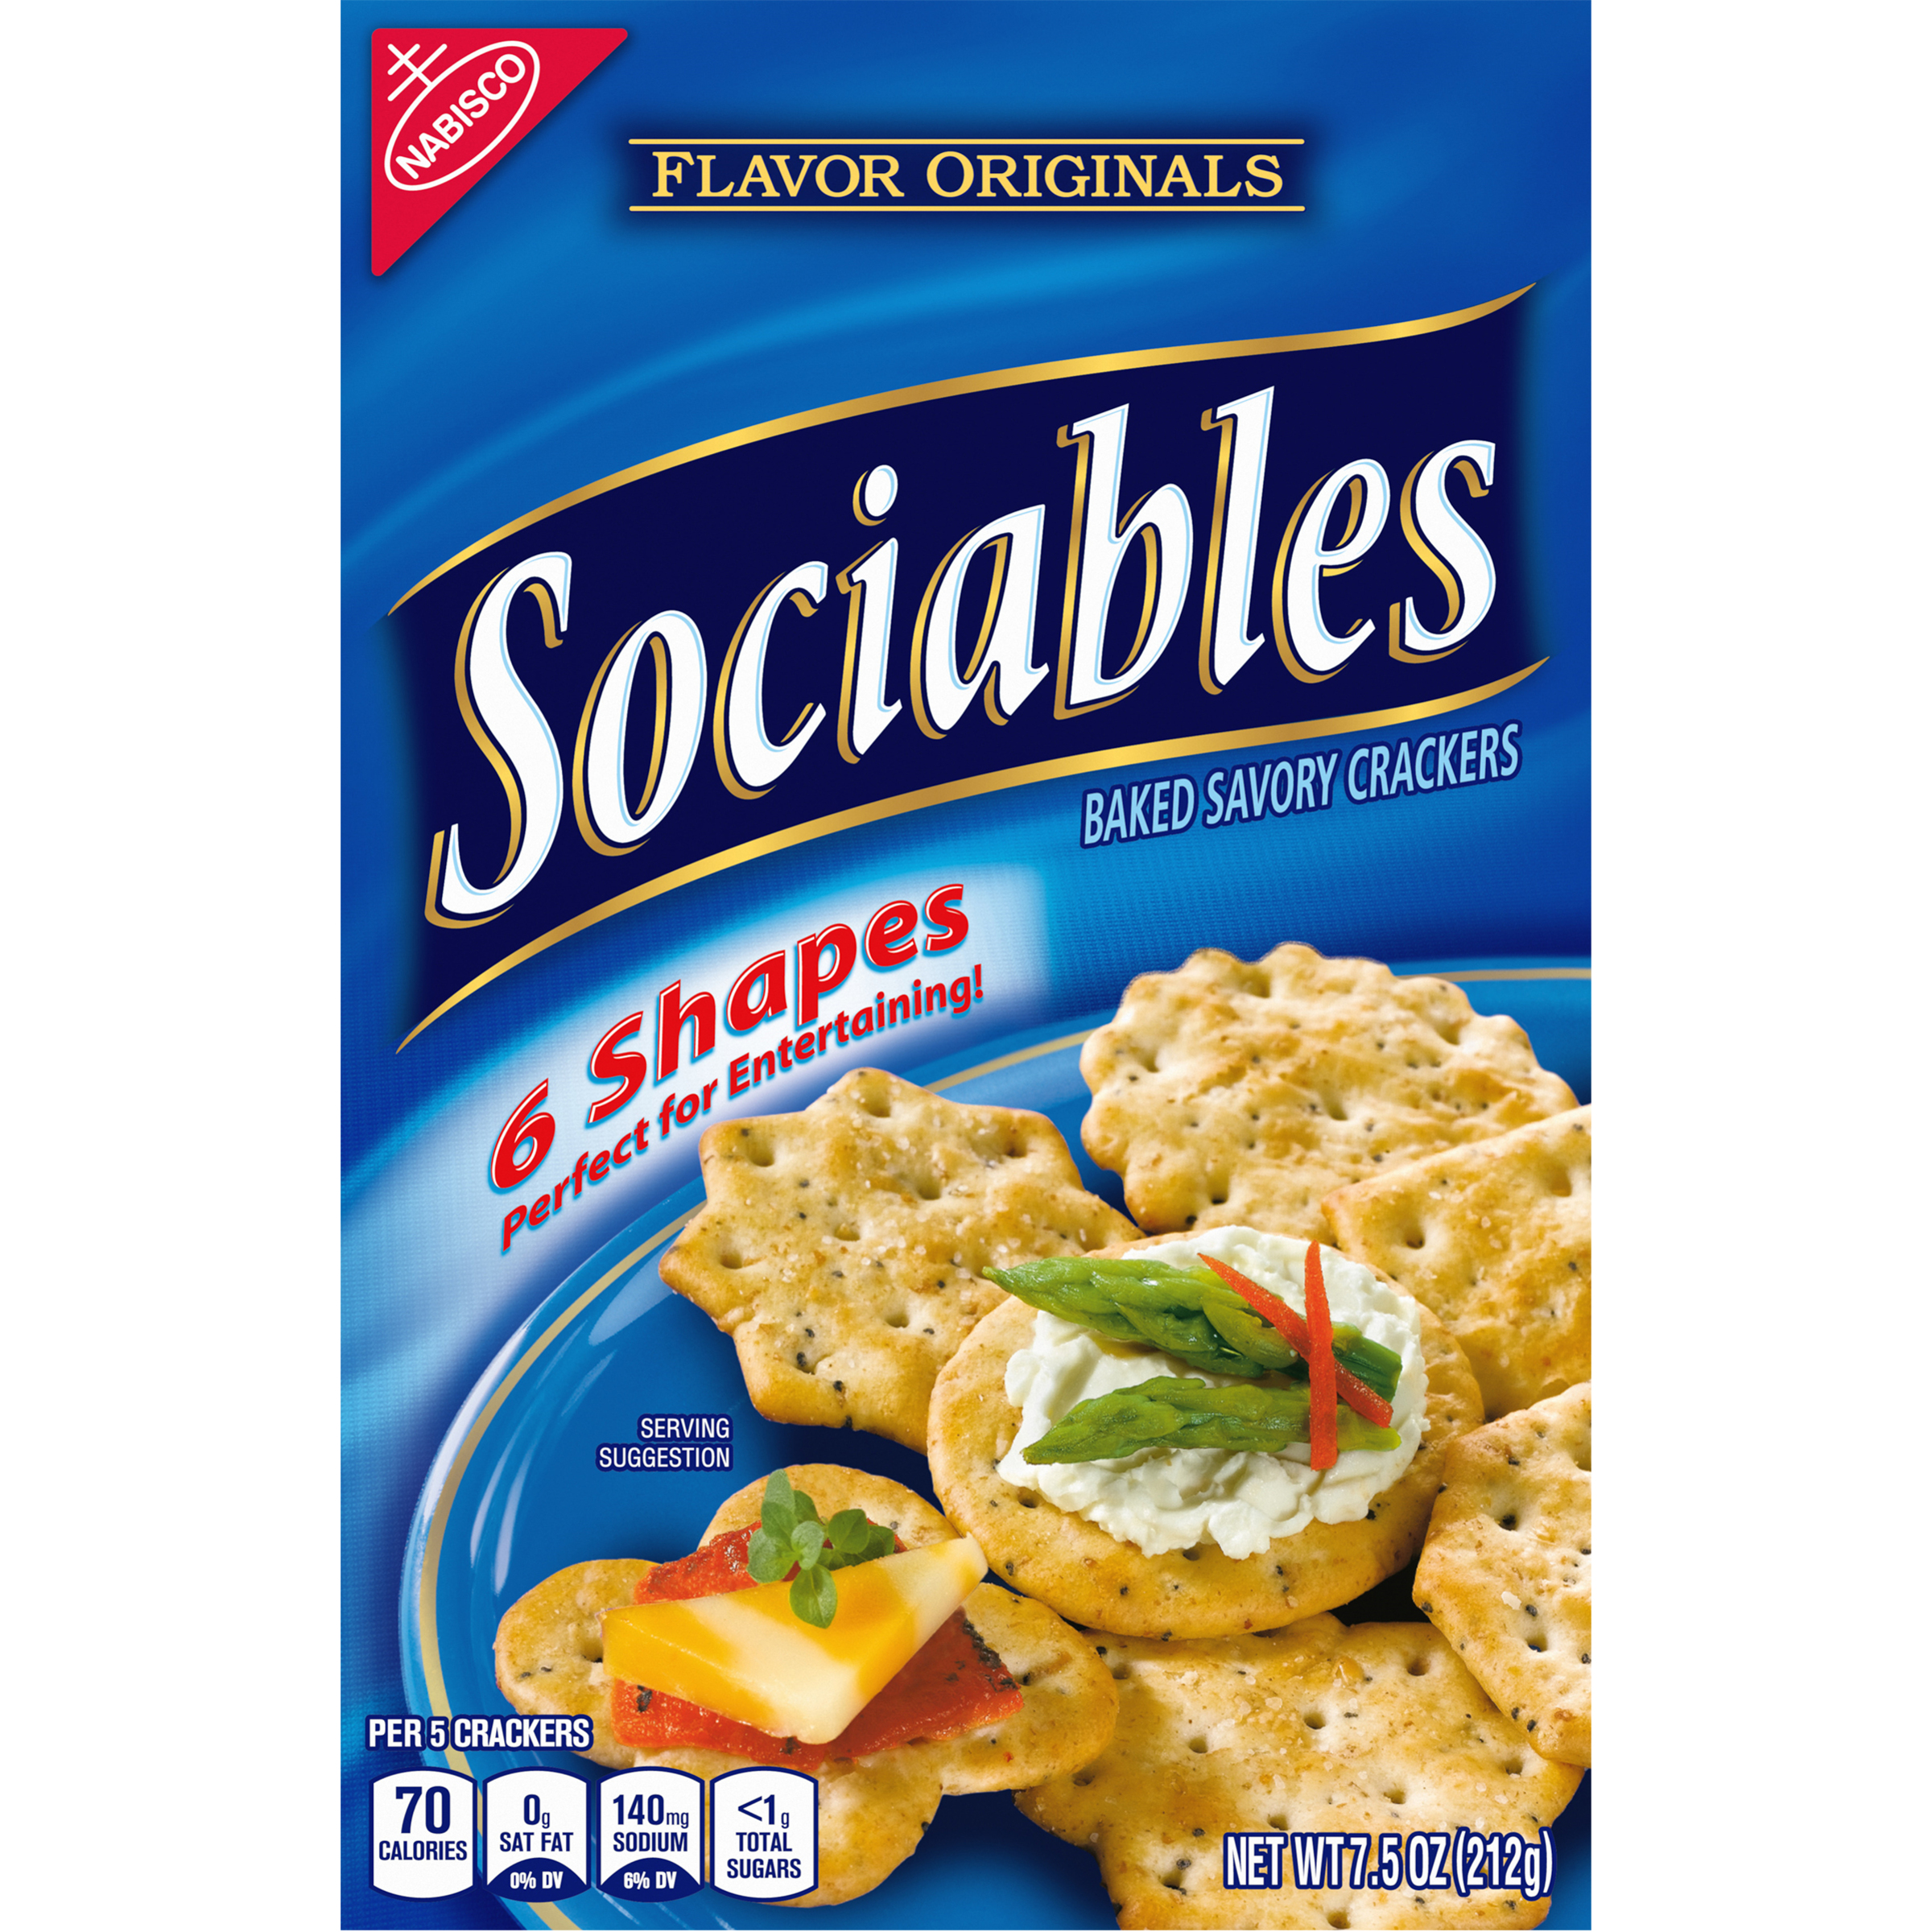 Flavor Originals Sociables Baked Savory Crackers, 7.5 oz-1